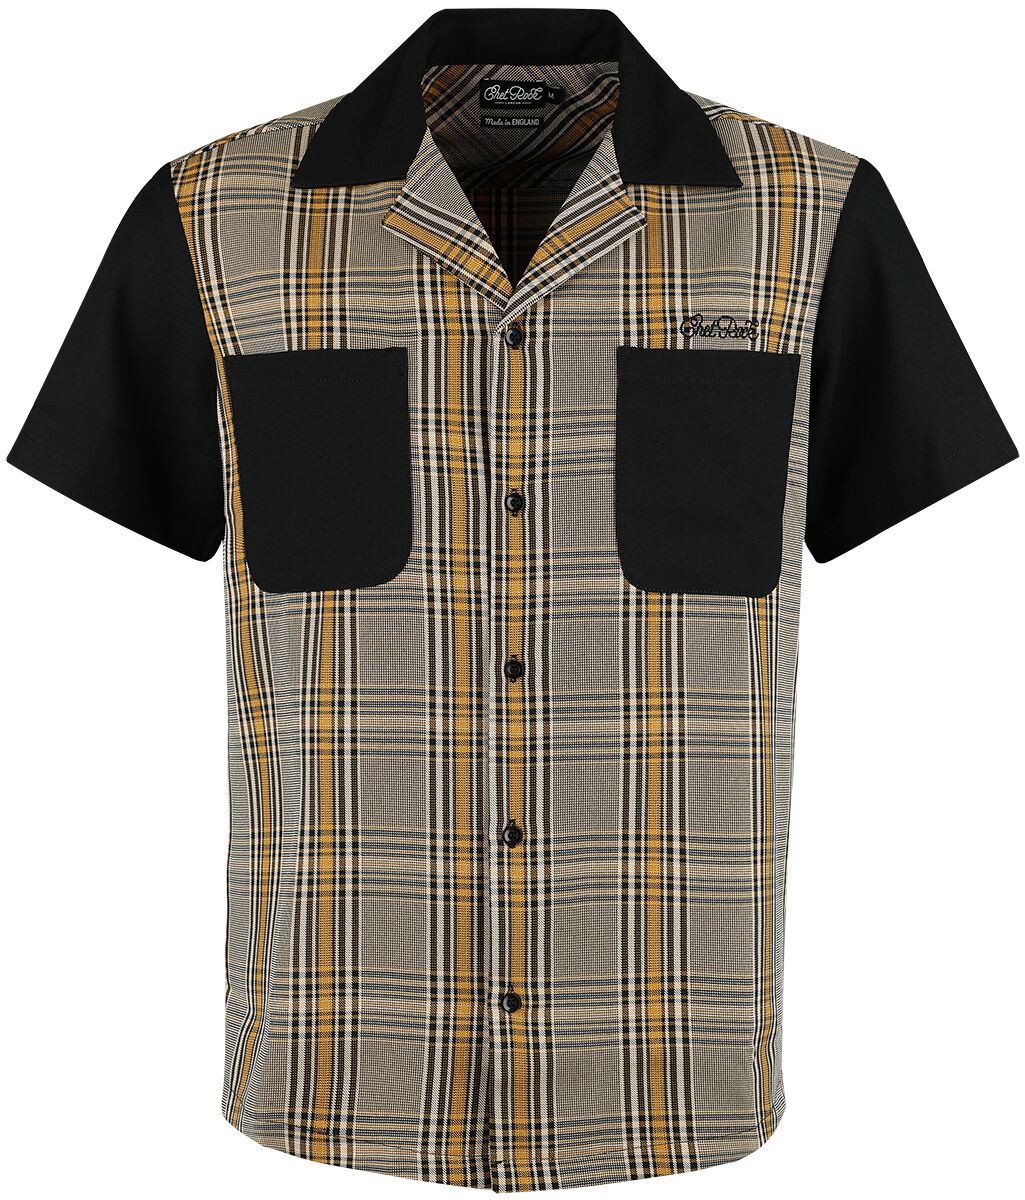 Chet Rock - Rockabilly Kurzarmhemd - Douglas Shirt - S bis 4XL - für Männer - Größe XXL - multicolor